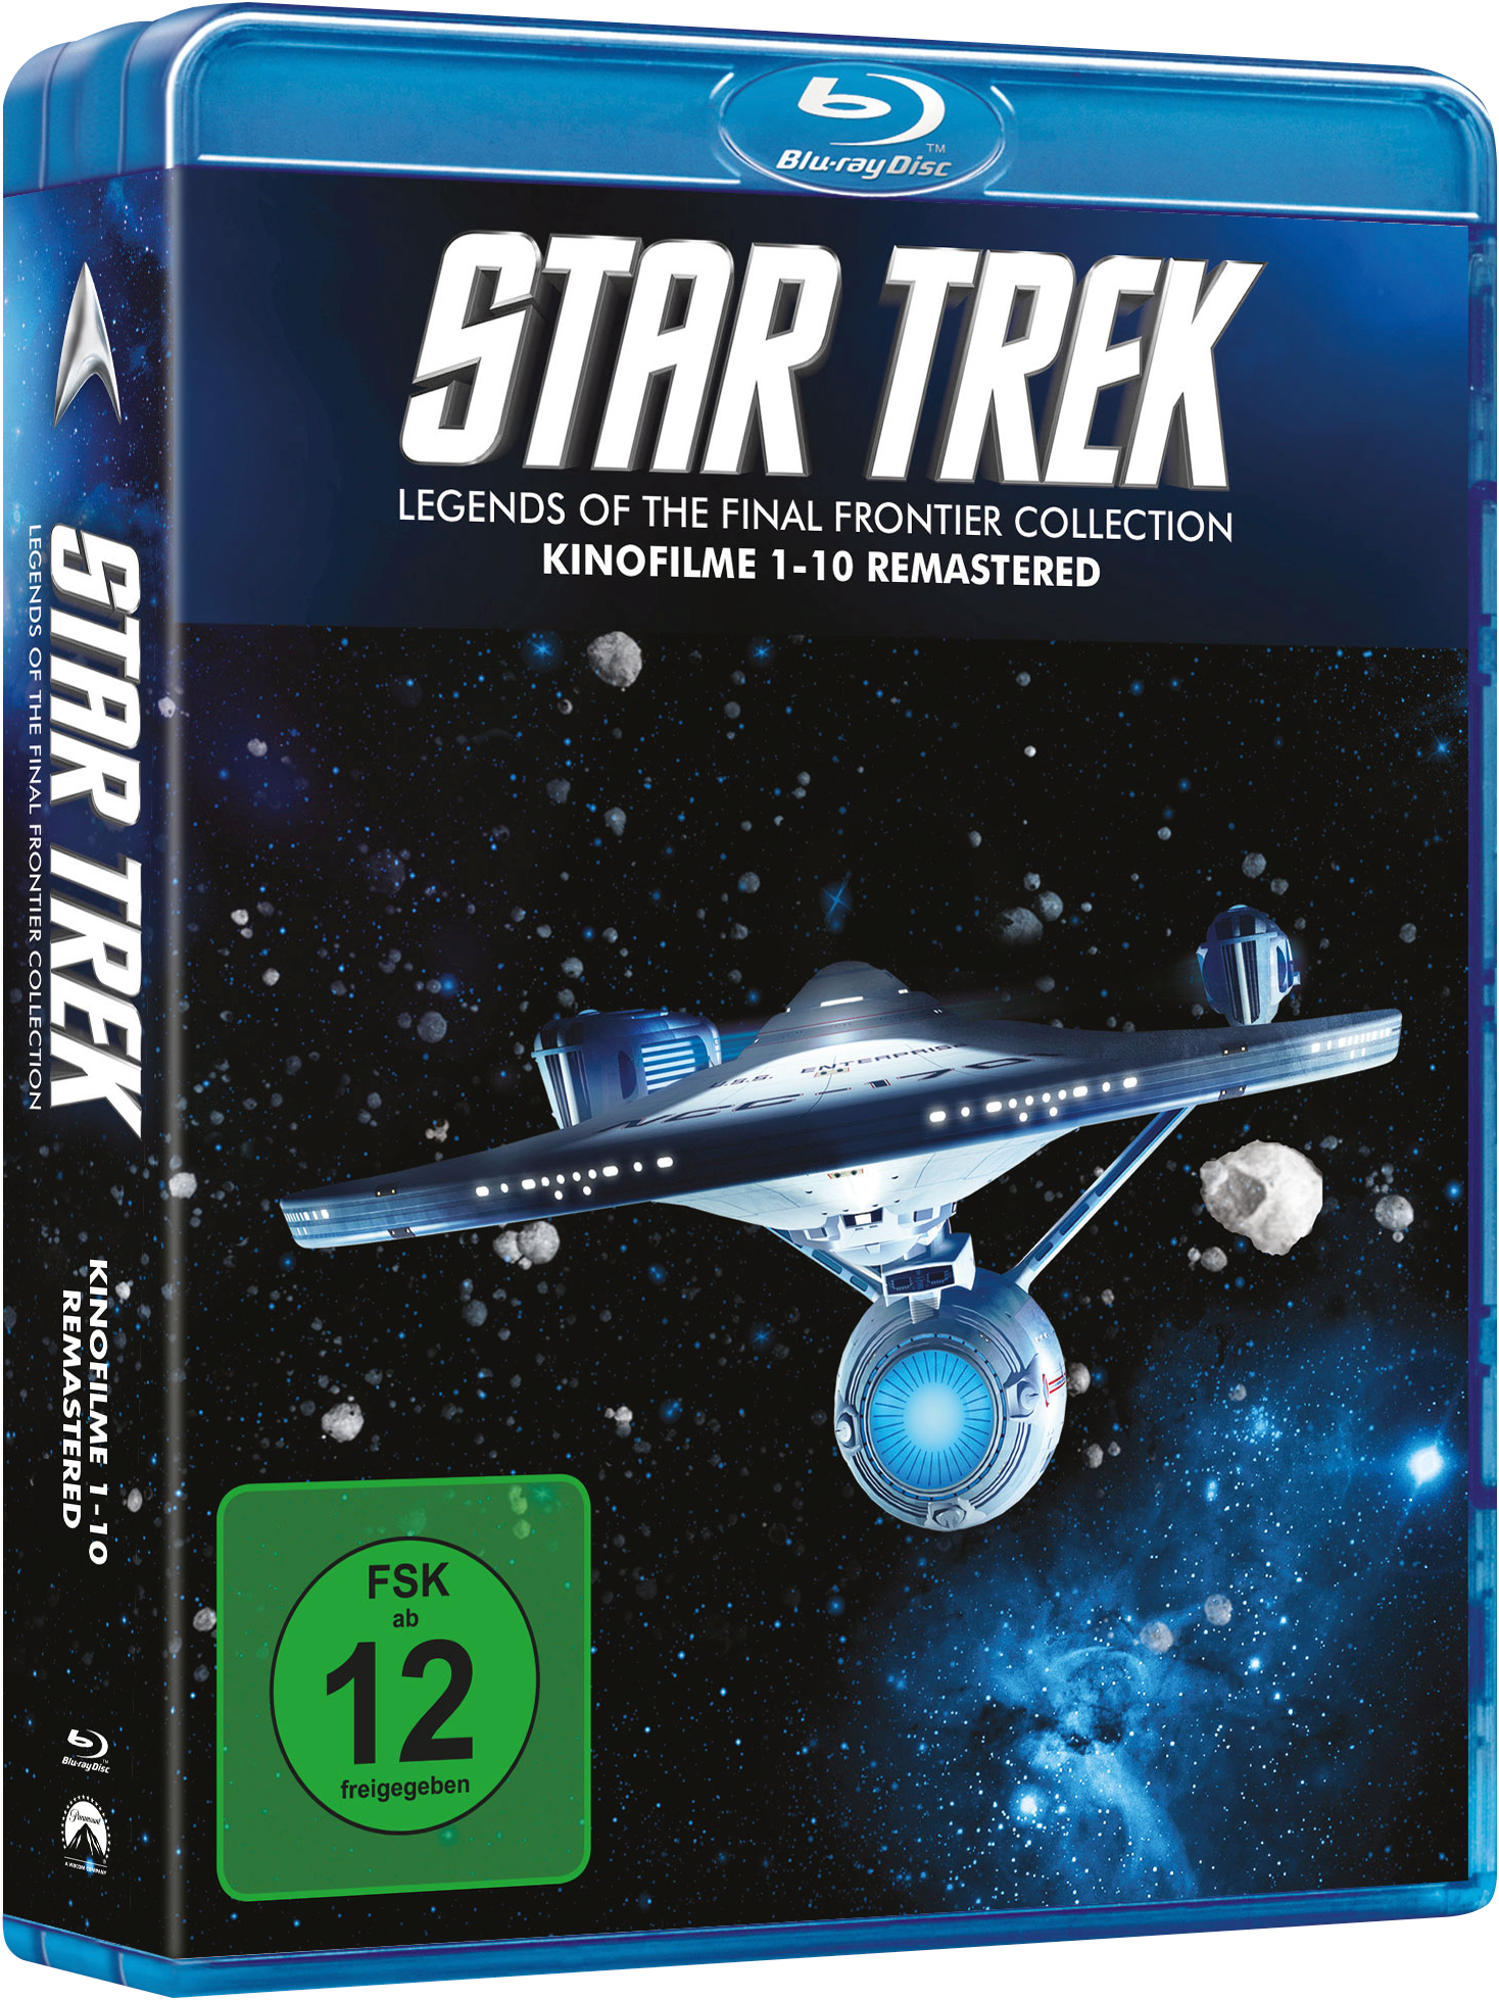 10: Remastered - Trek 1 Blu-ray Star